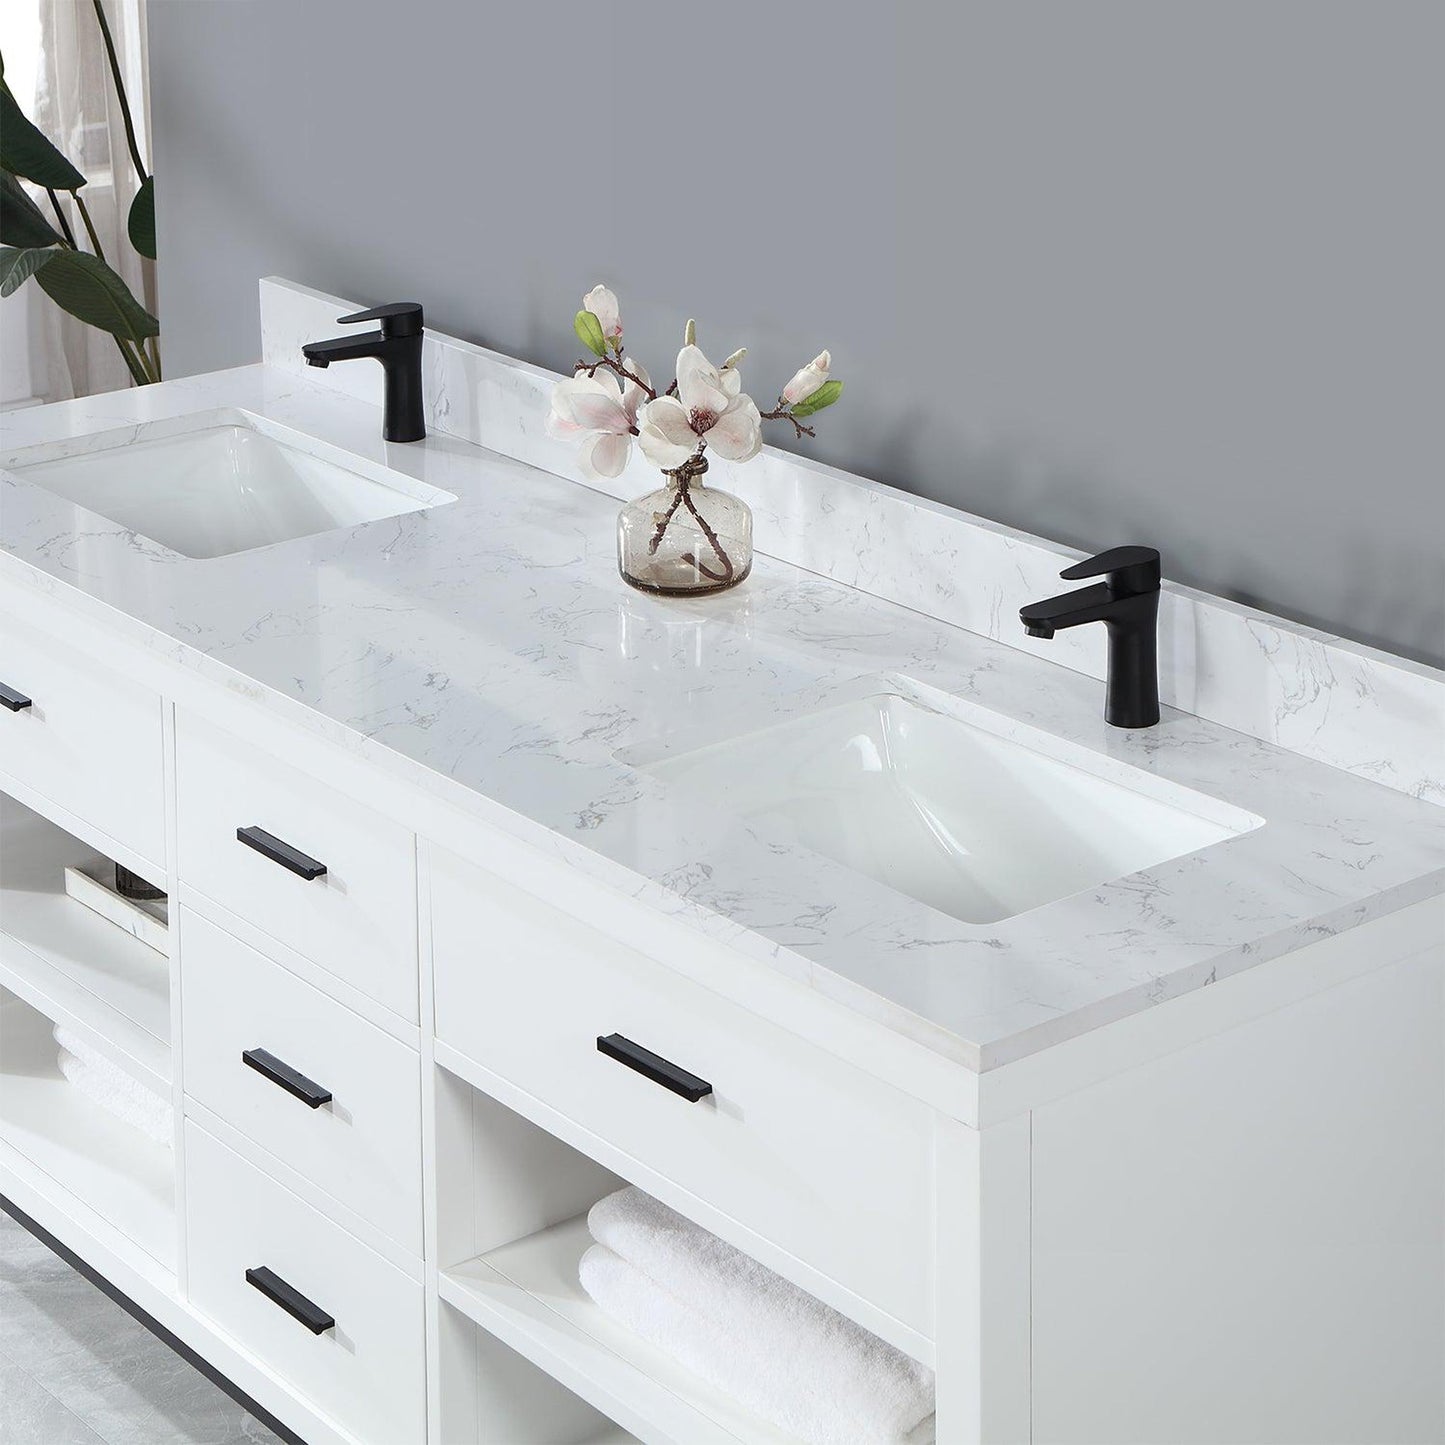 Altair Kesia 72" White Freestanding Double Bathroom Vanity Set With Stylish Aosta White Composite Stone Top, Two Rectangular Undermount Ceramic Sinks, Overflow, and Backsplash